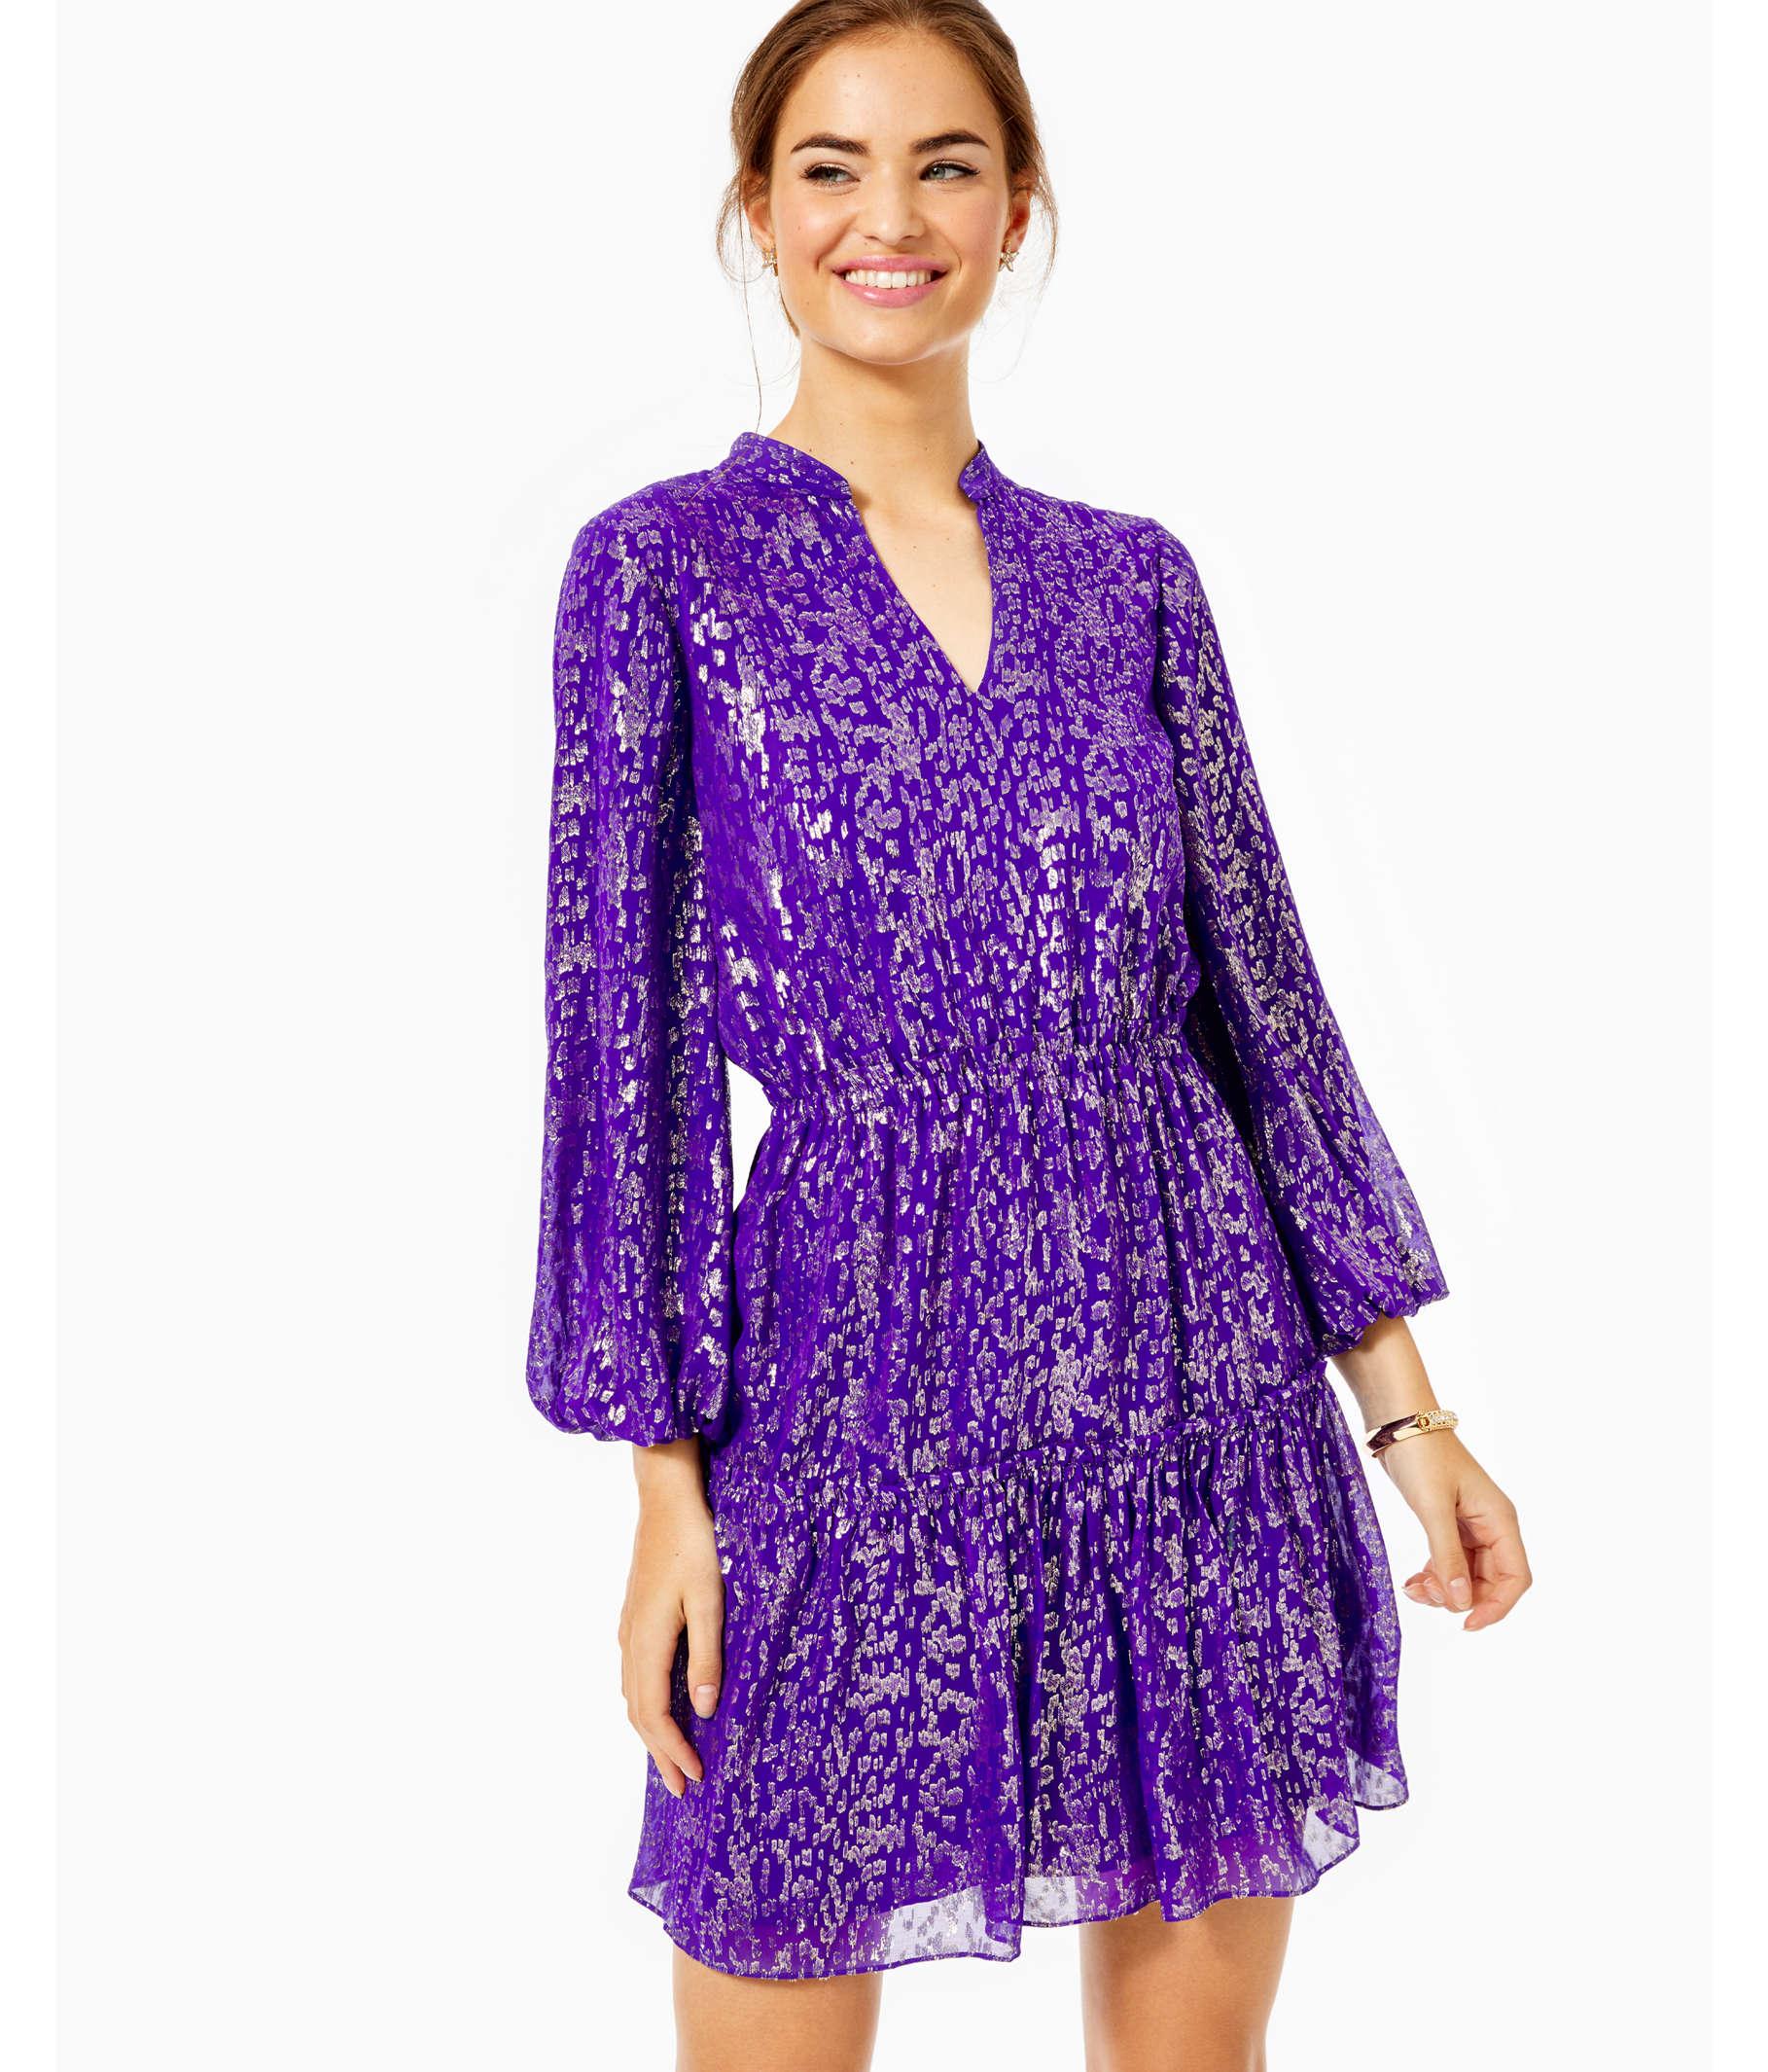 Lilly Pulitzer Joella Silk Dress in Purple - Lyst